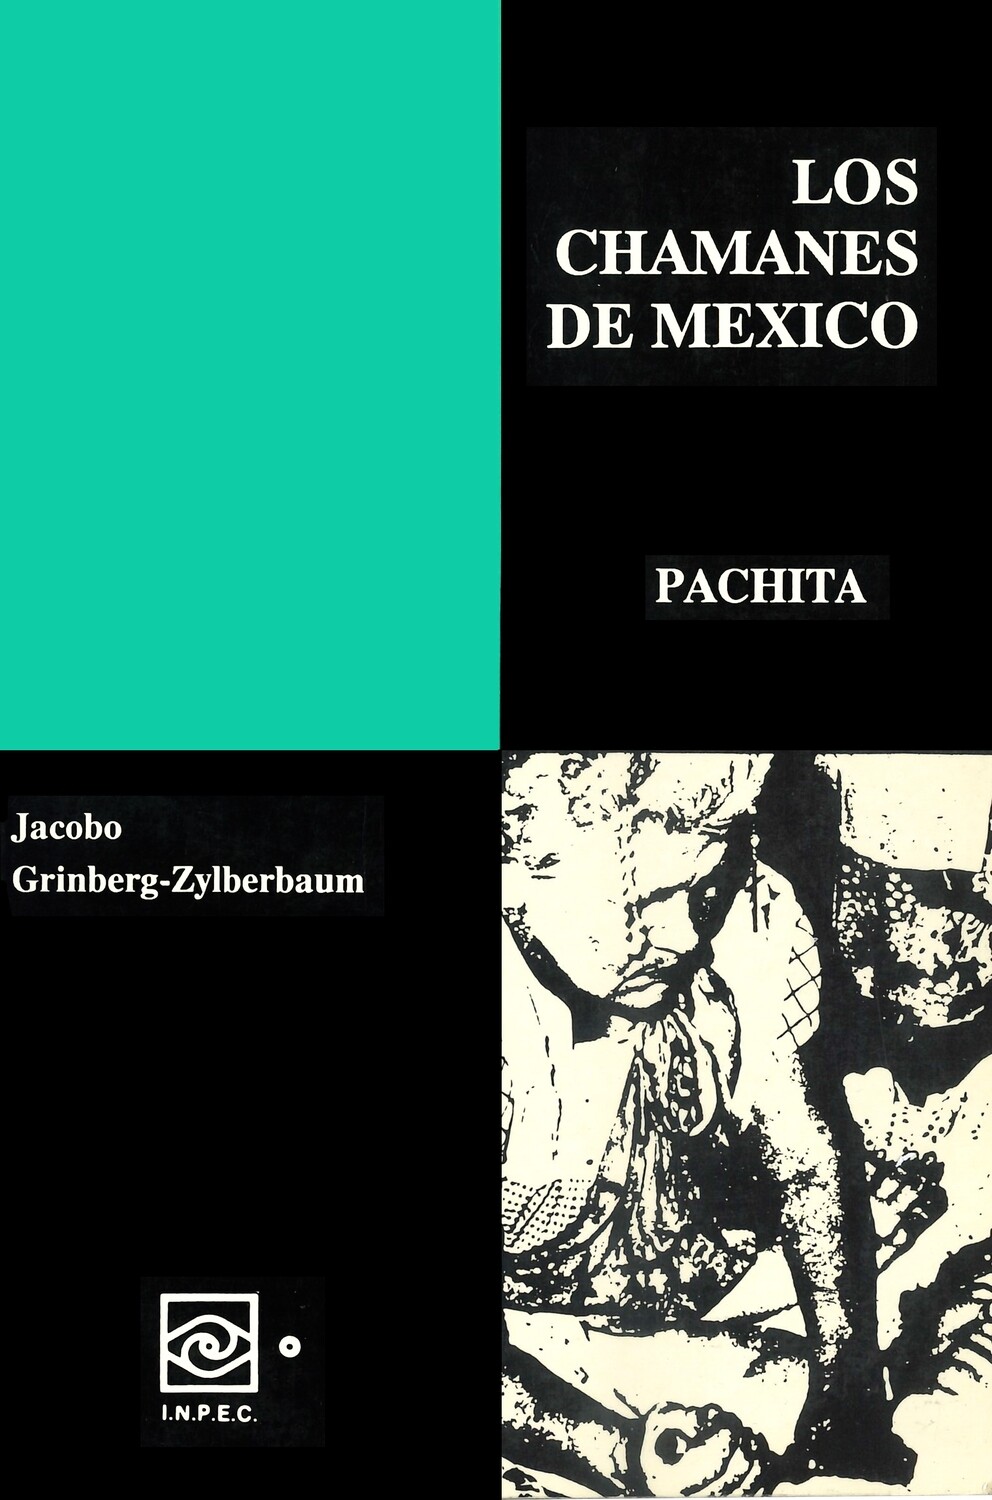 Los Chamanes de México vol. 3 Pachita